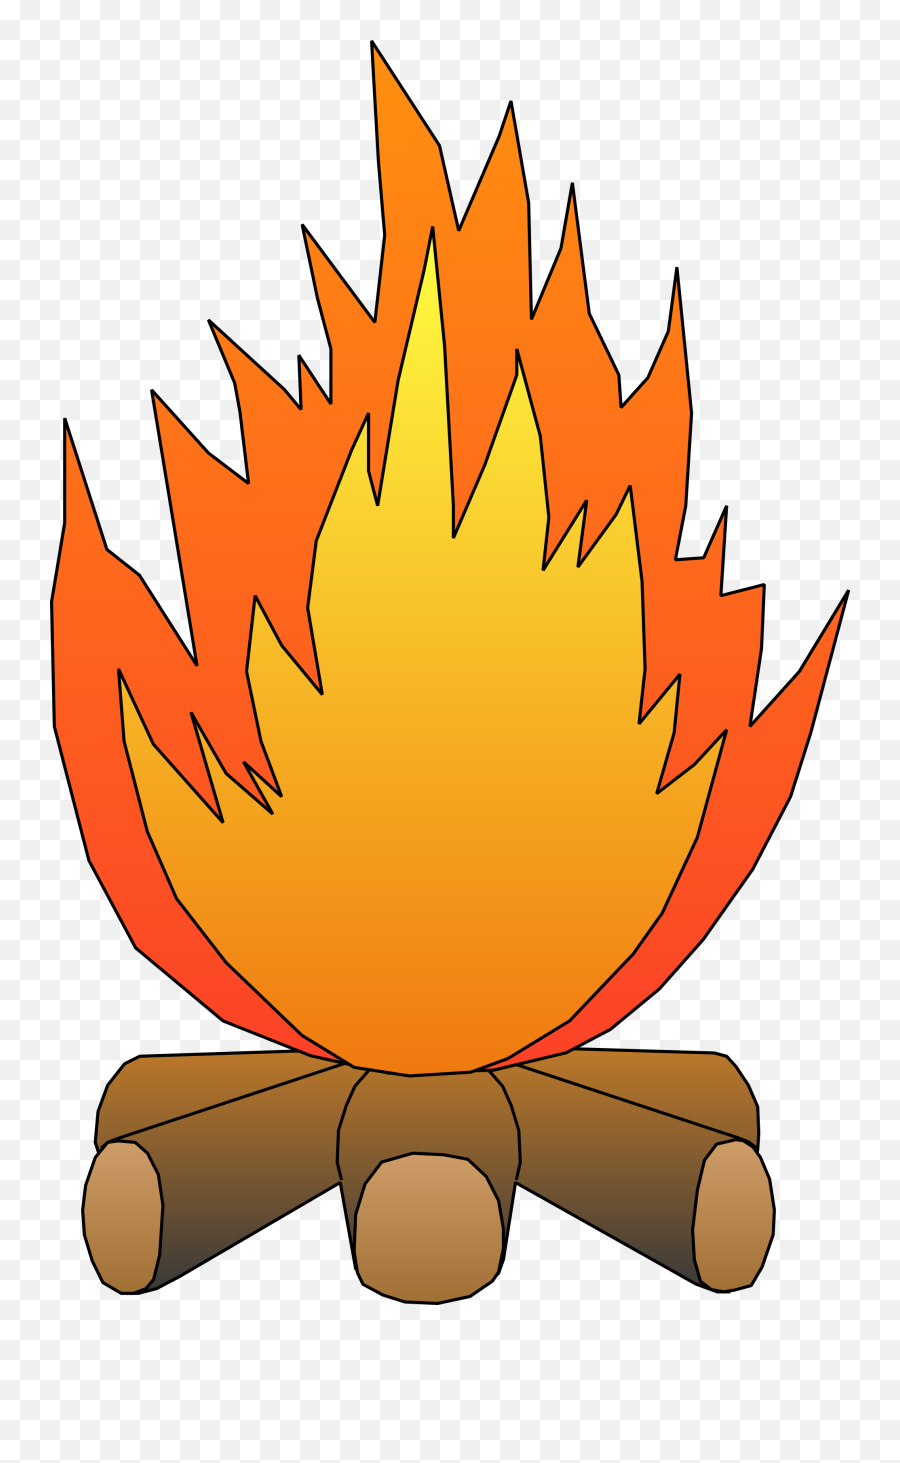 Football Fire Extinguisher Emoji - Fire Clipart,Fire Extinguisher Emoji